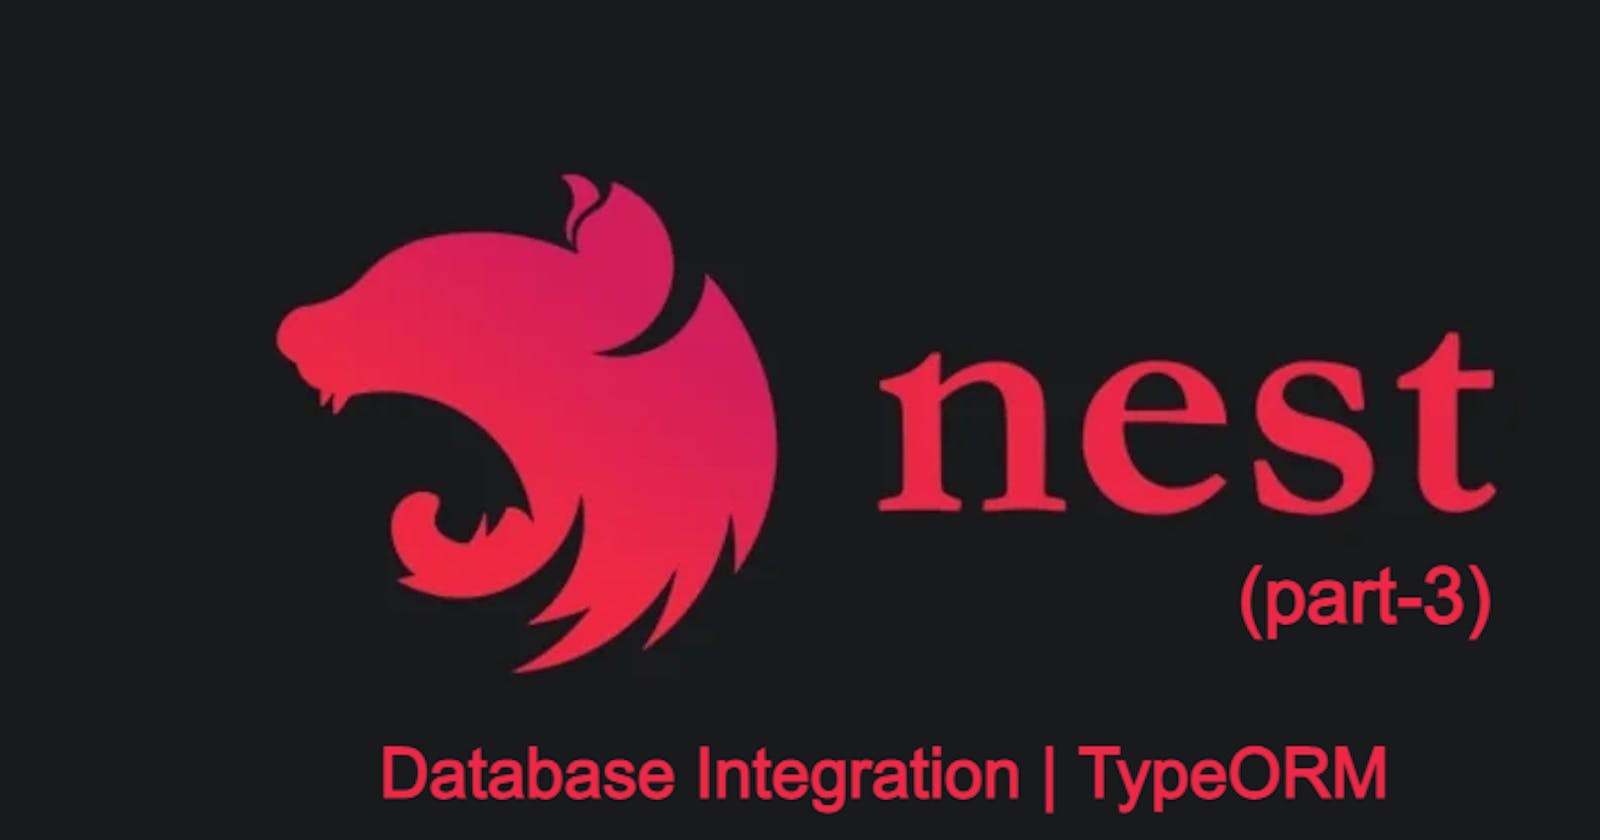 Nestjs🐺⚡ | The framework of Nodejs (Part-3) | Database Integration, TypeORM